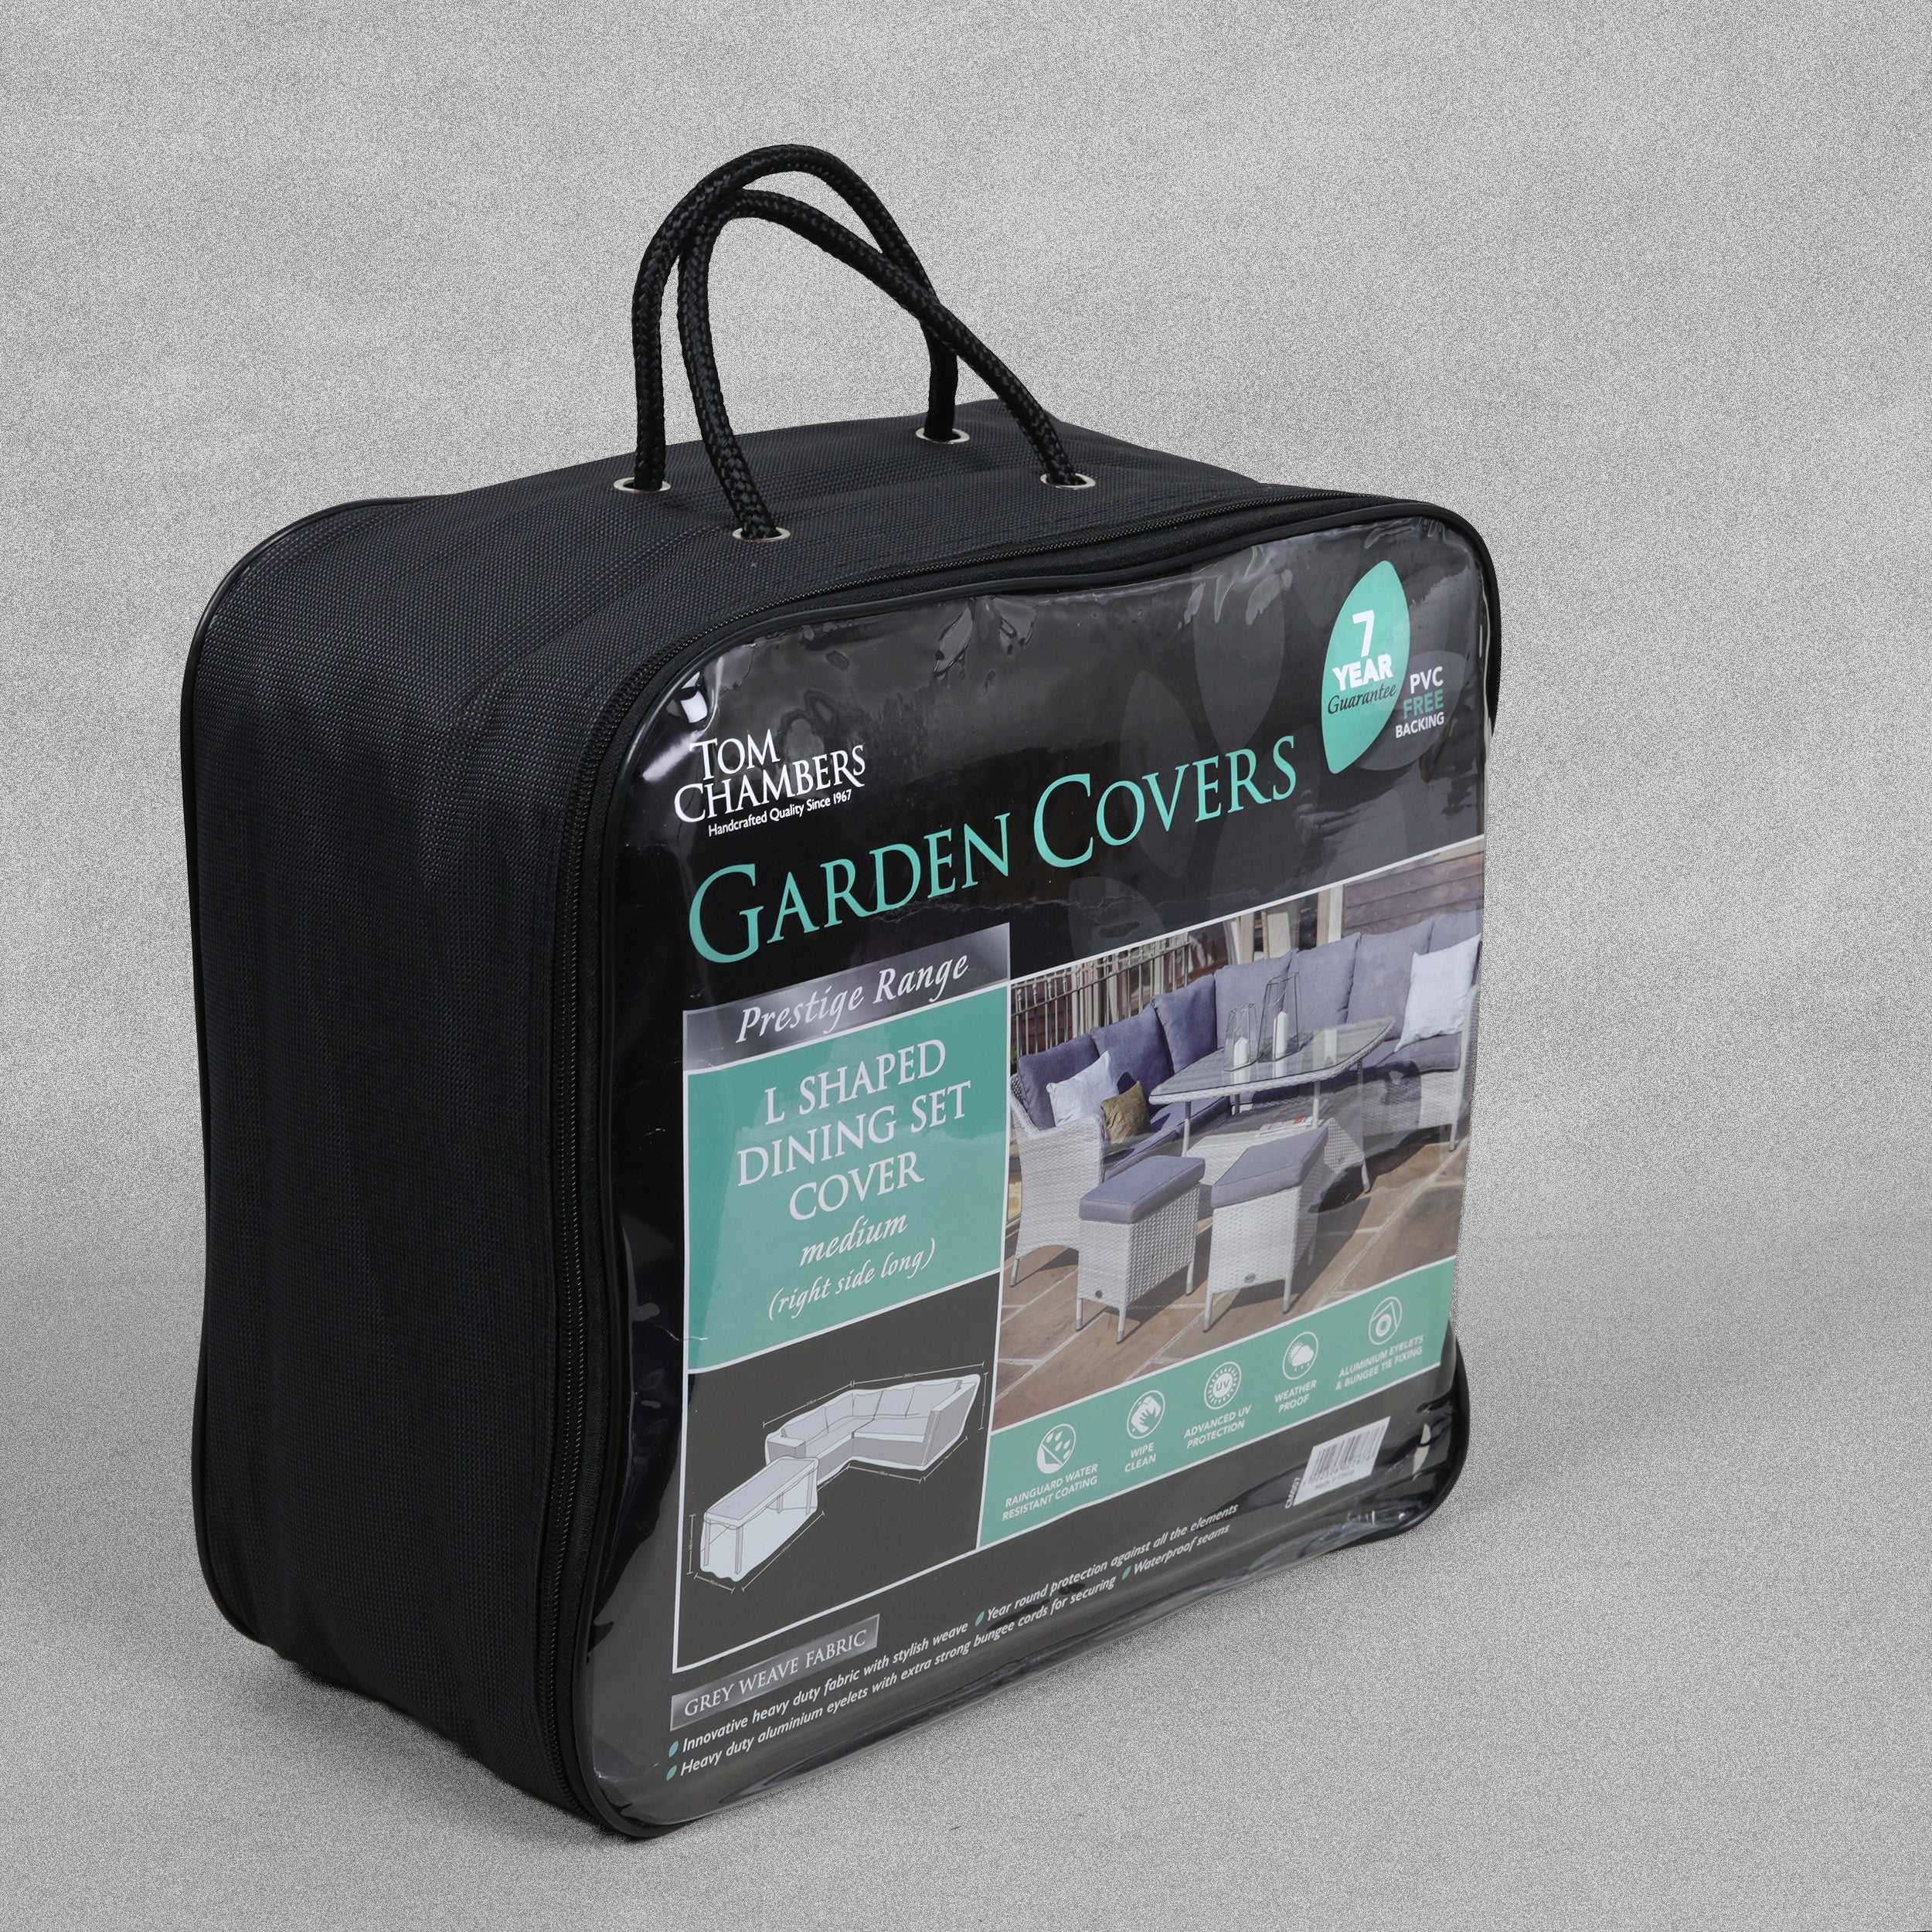 Tom Chambers Prestige Range Garden Covers - L Shaped Dining Set Cover Medium - Grey